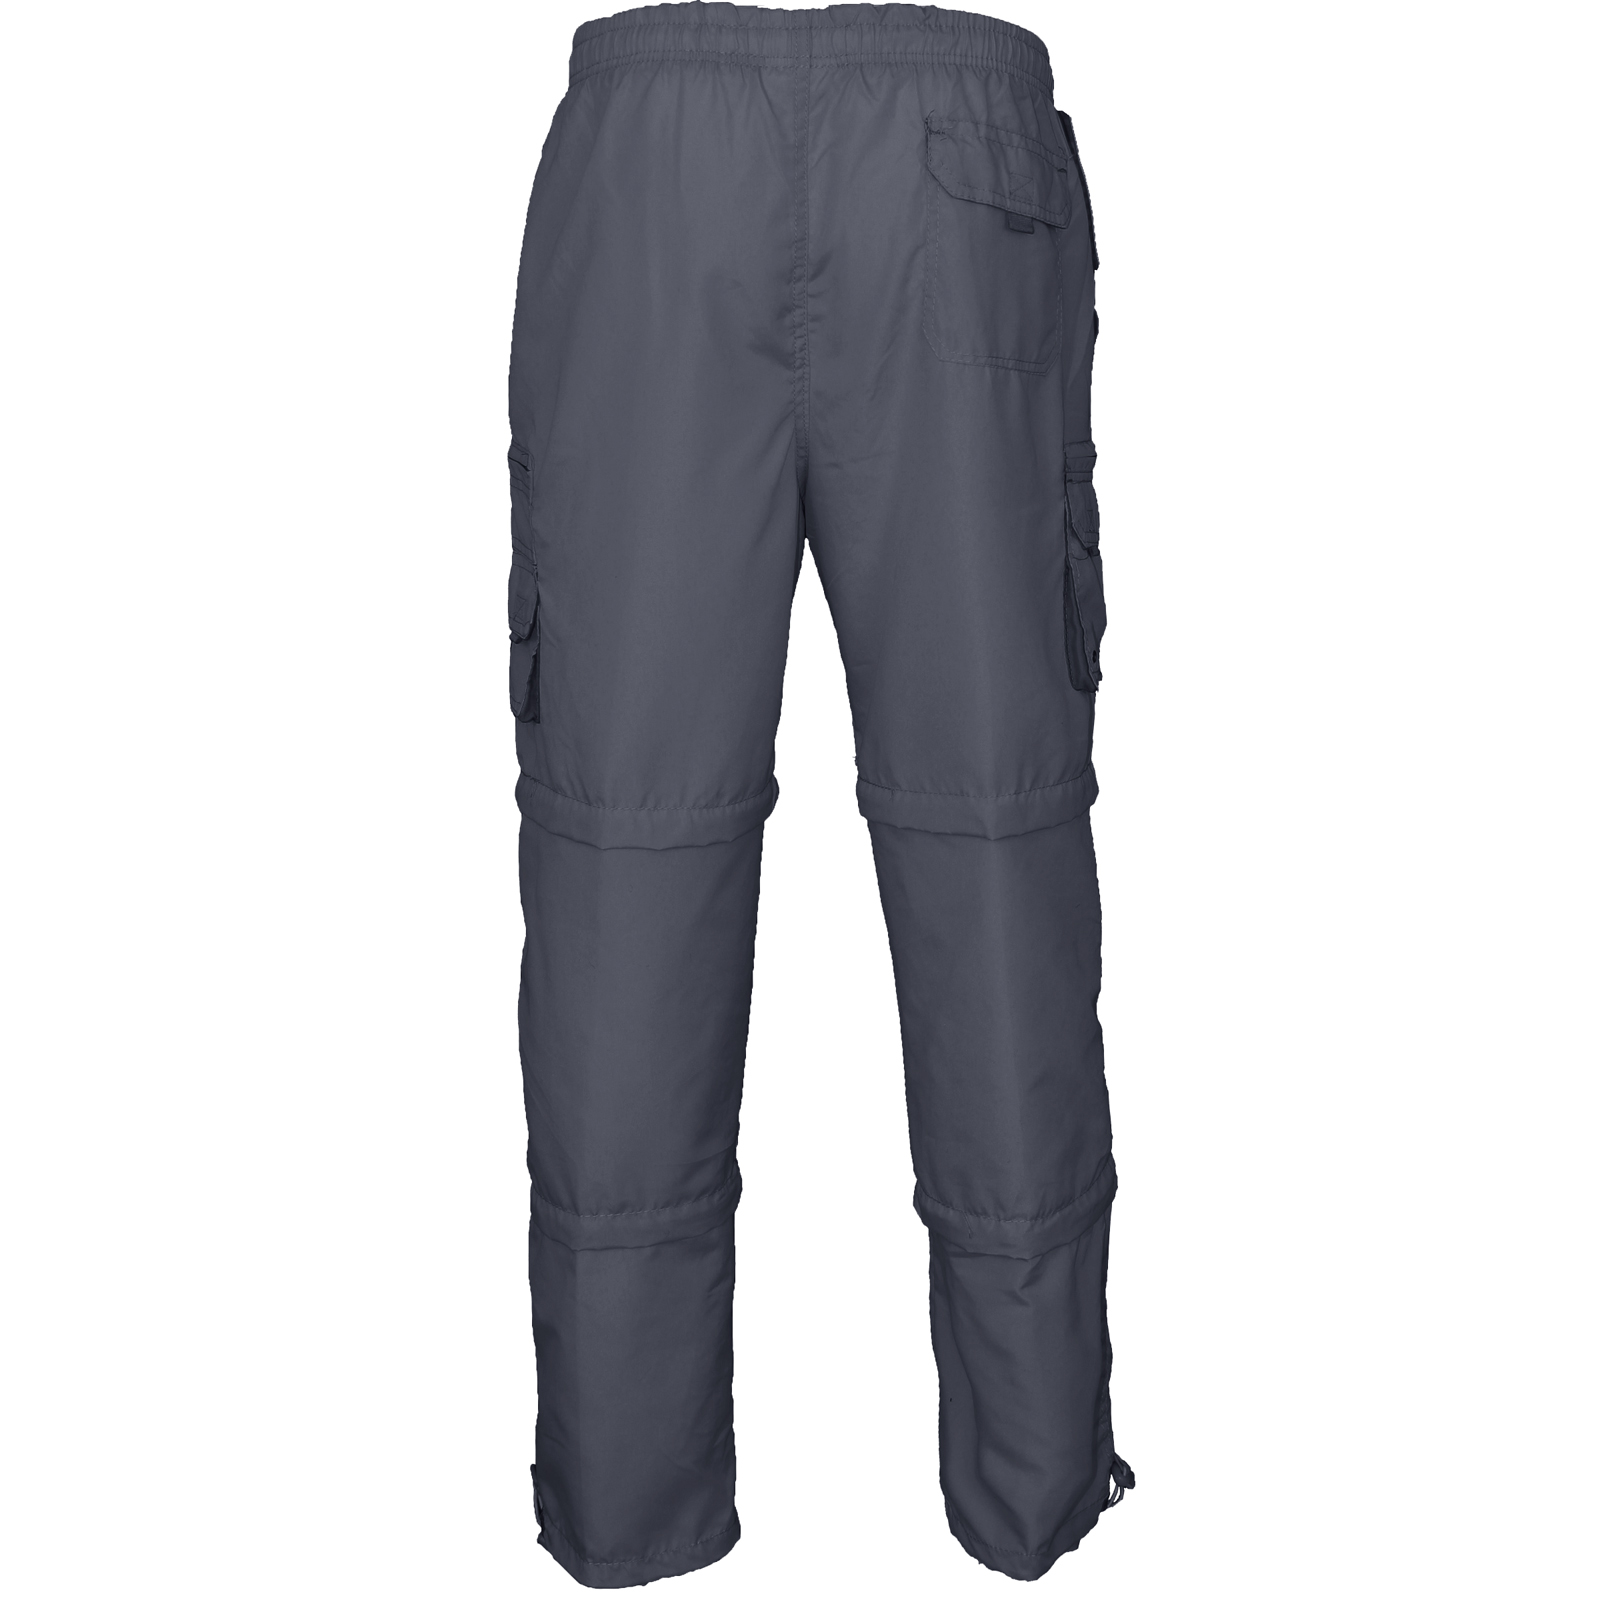 Mens Elasticated Summer Trousers New Cargo Combat Work Pants Lightweight Shorts 